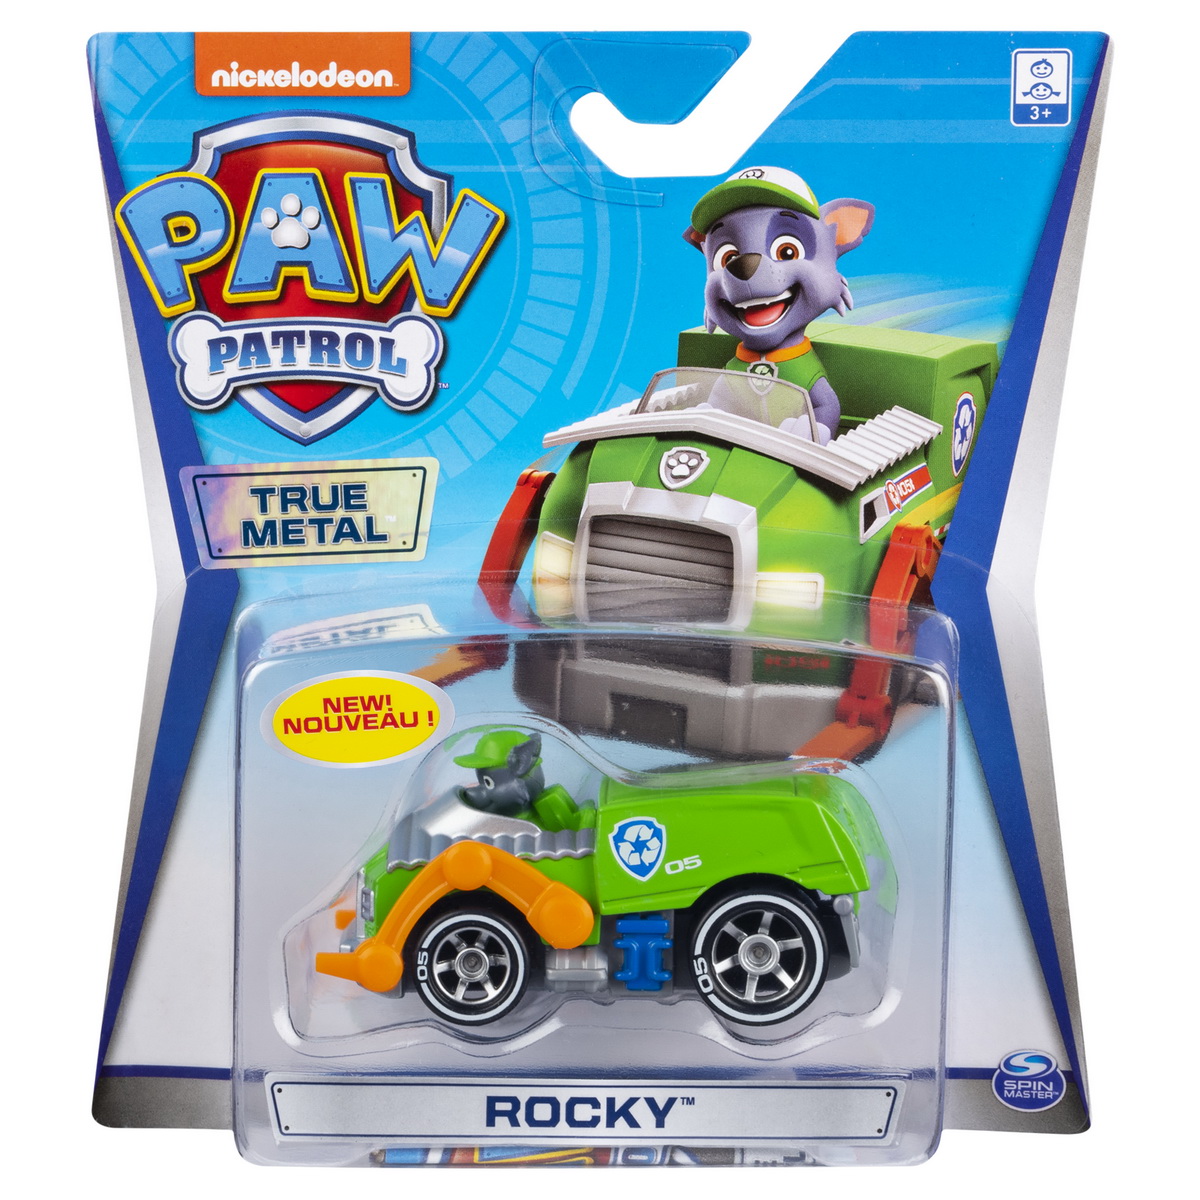 Patrula Catelusilor macheta metalica Rocky cu masina de curatenie, 20127213, Nickelodeon